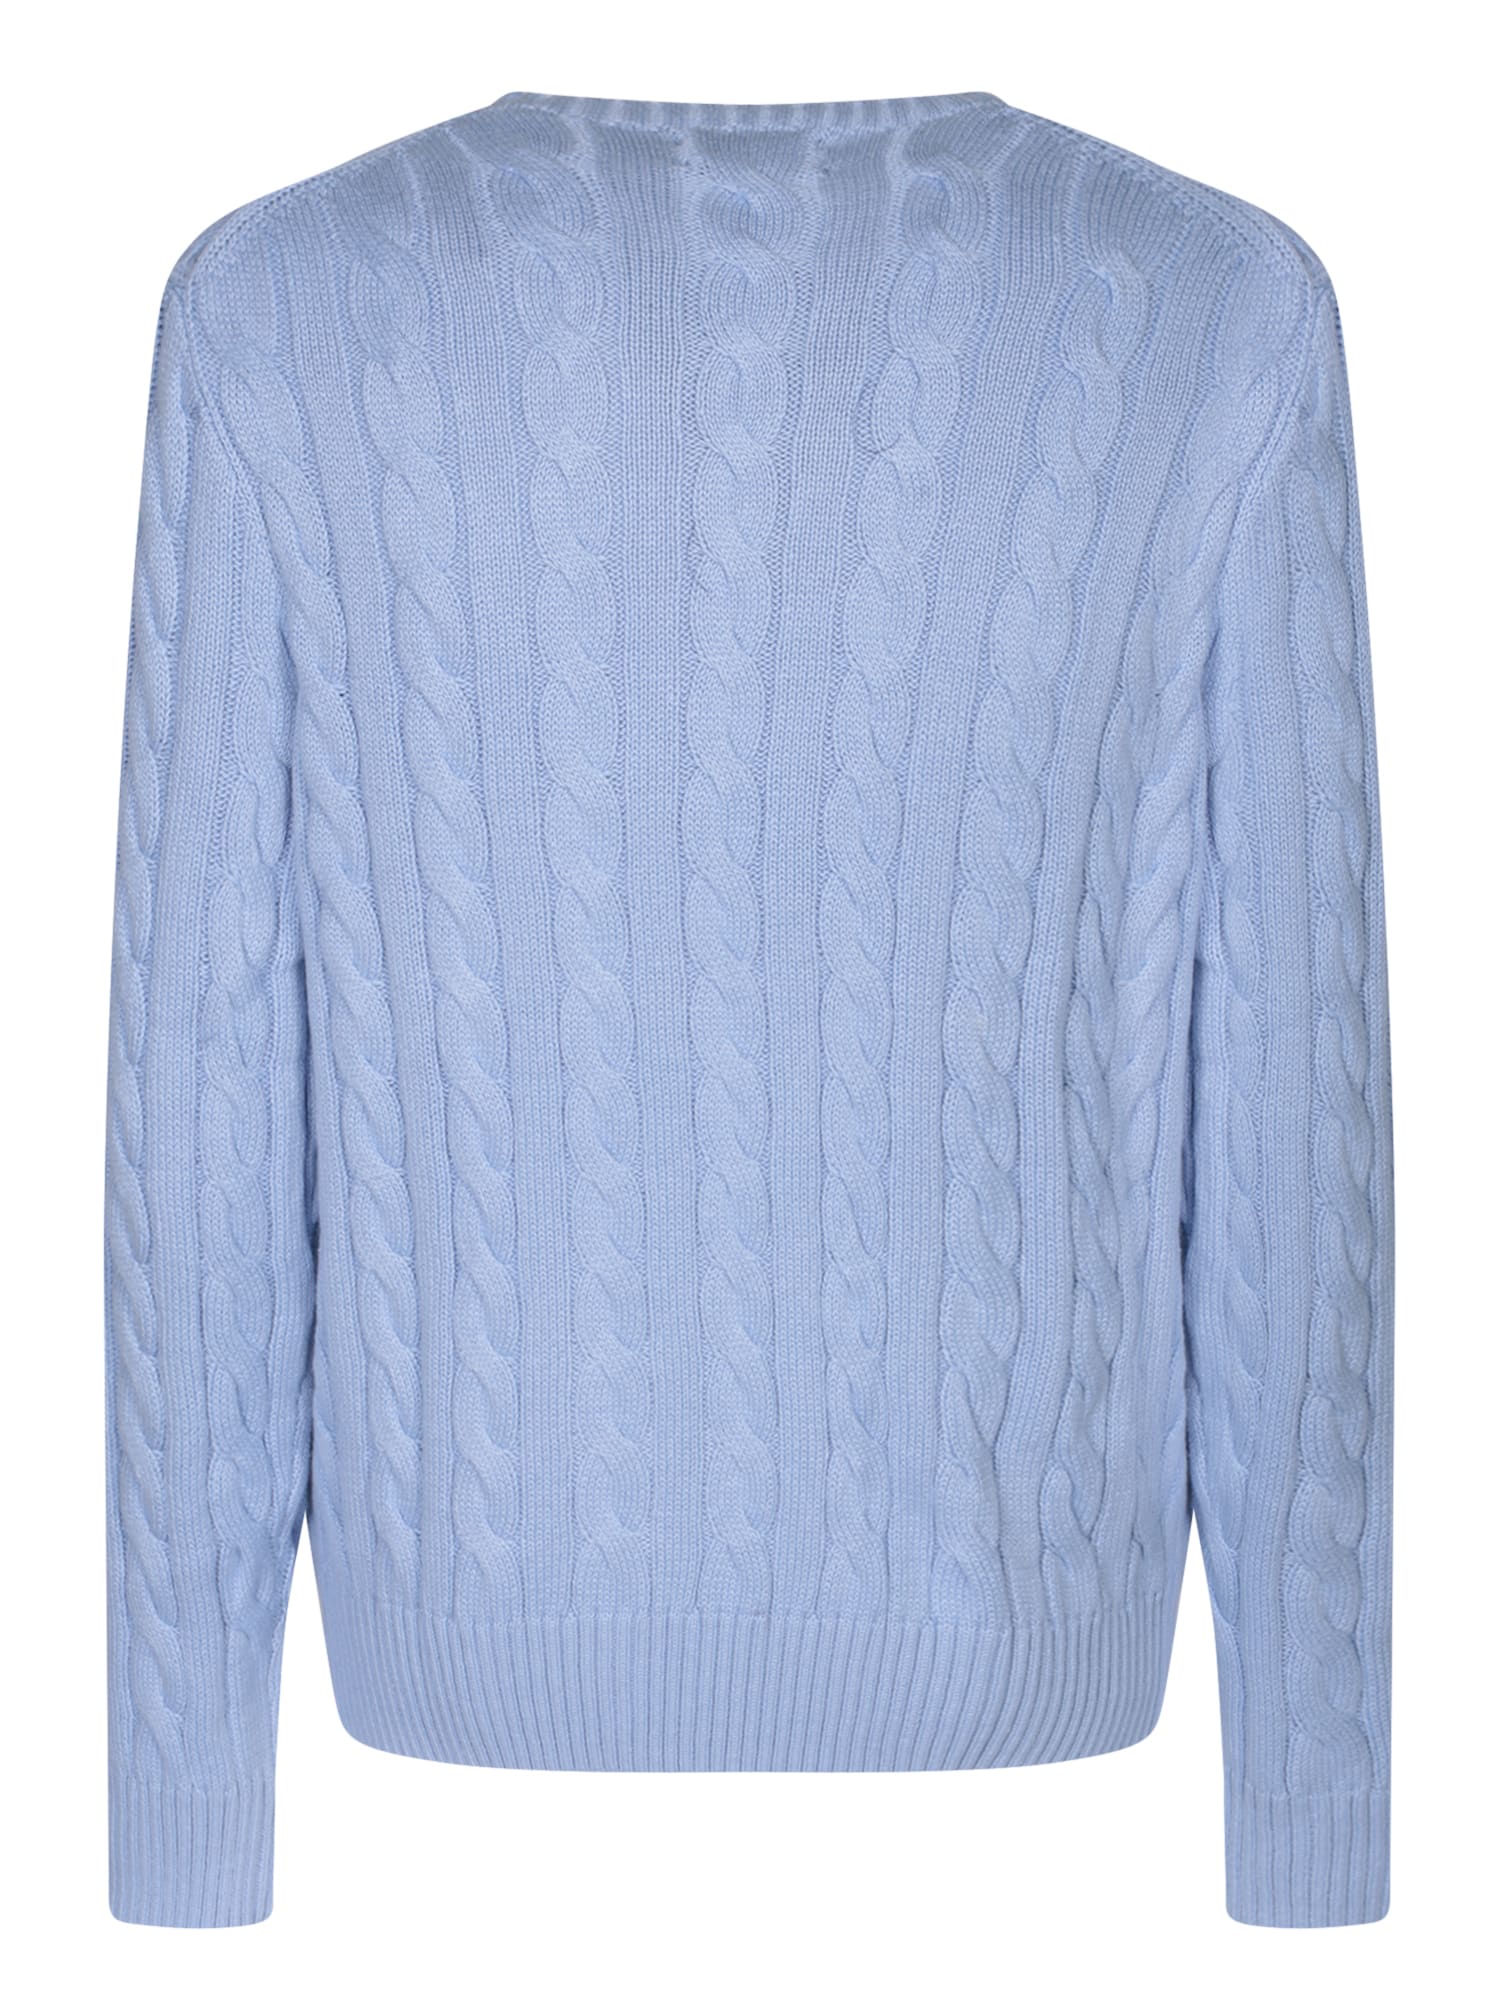 Shop Polo Ralph Lauren Light Blue Cable Knit Cotton Sweater By